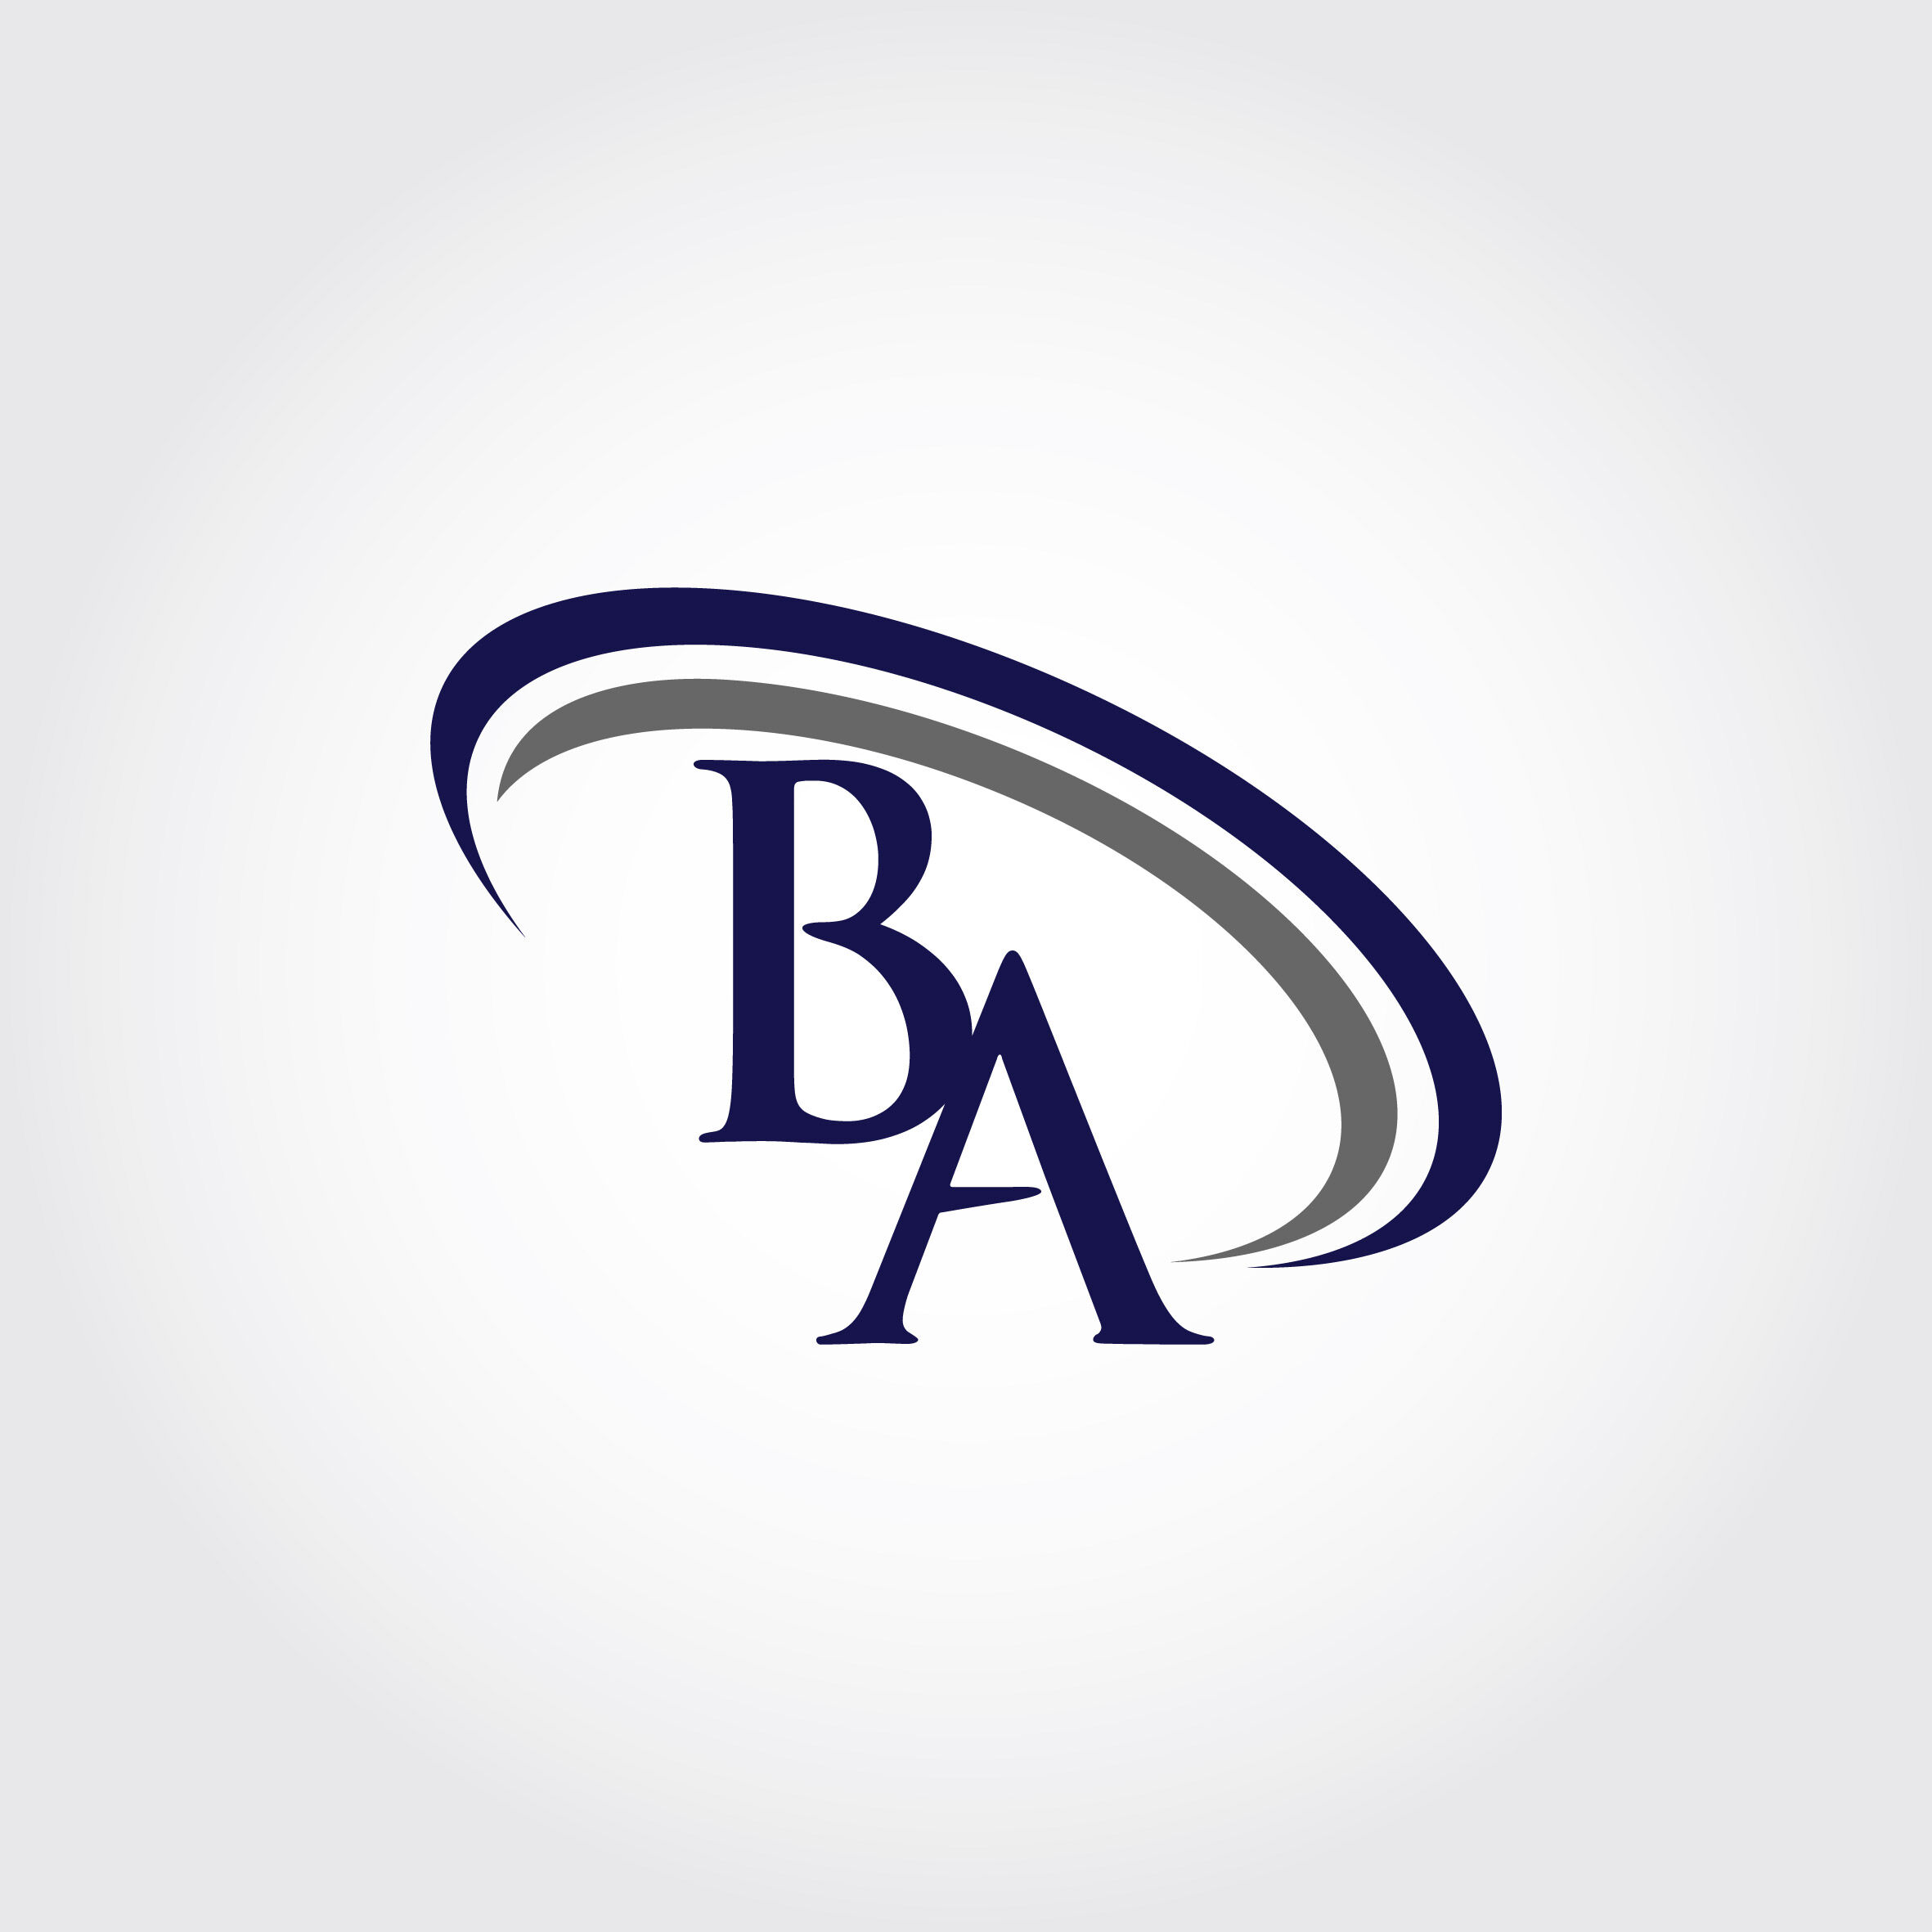 monogram-ba-logo-design-by-vectorseller-thehungryjpeg